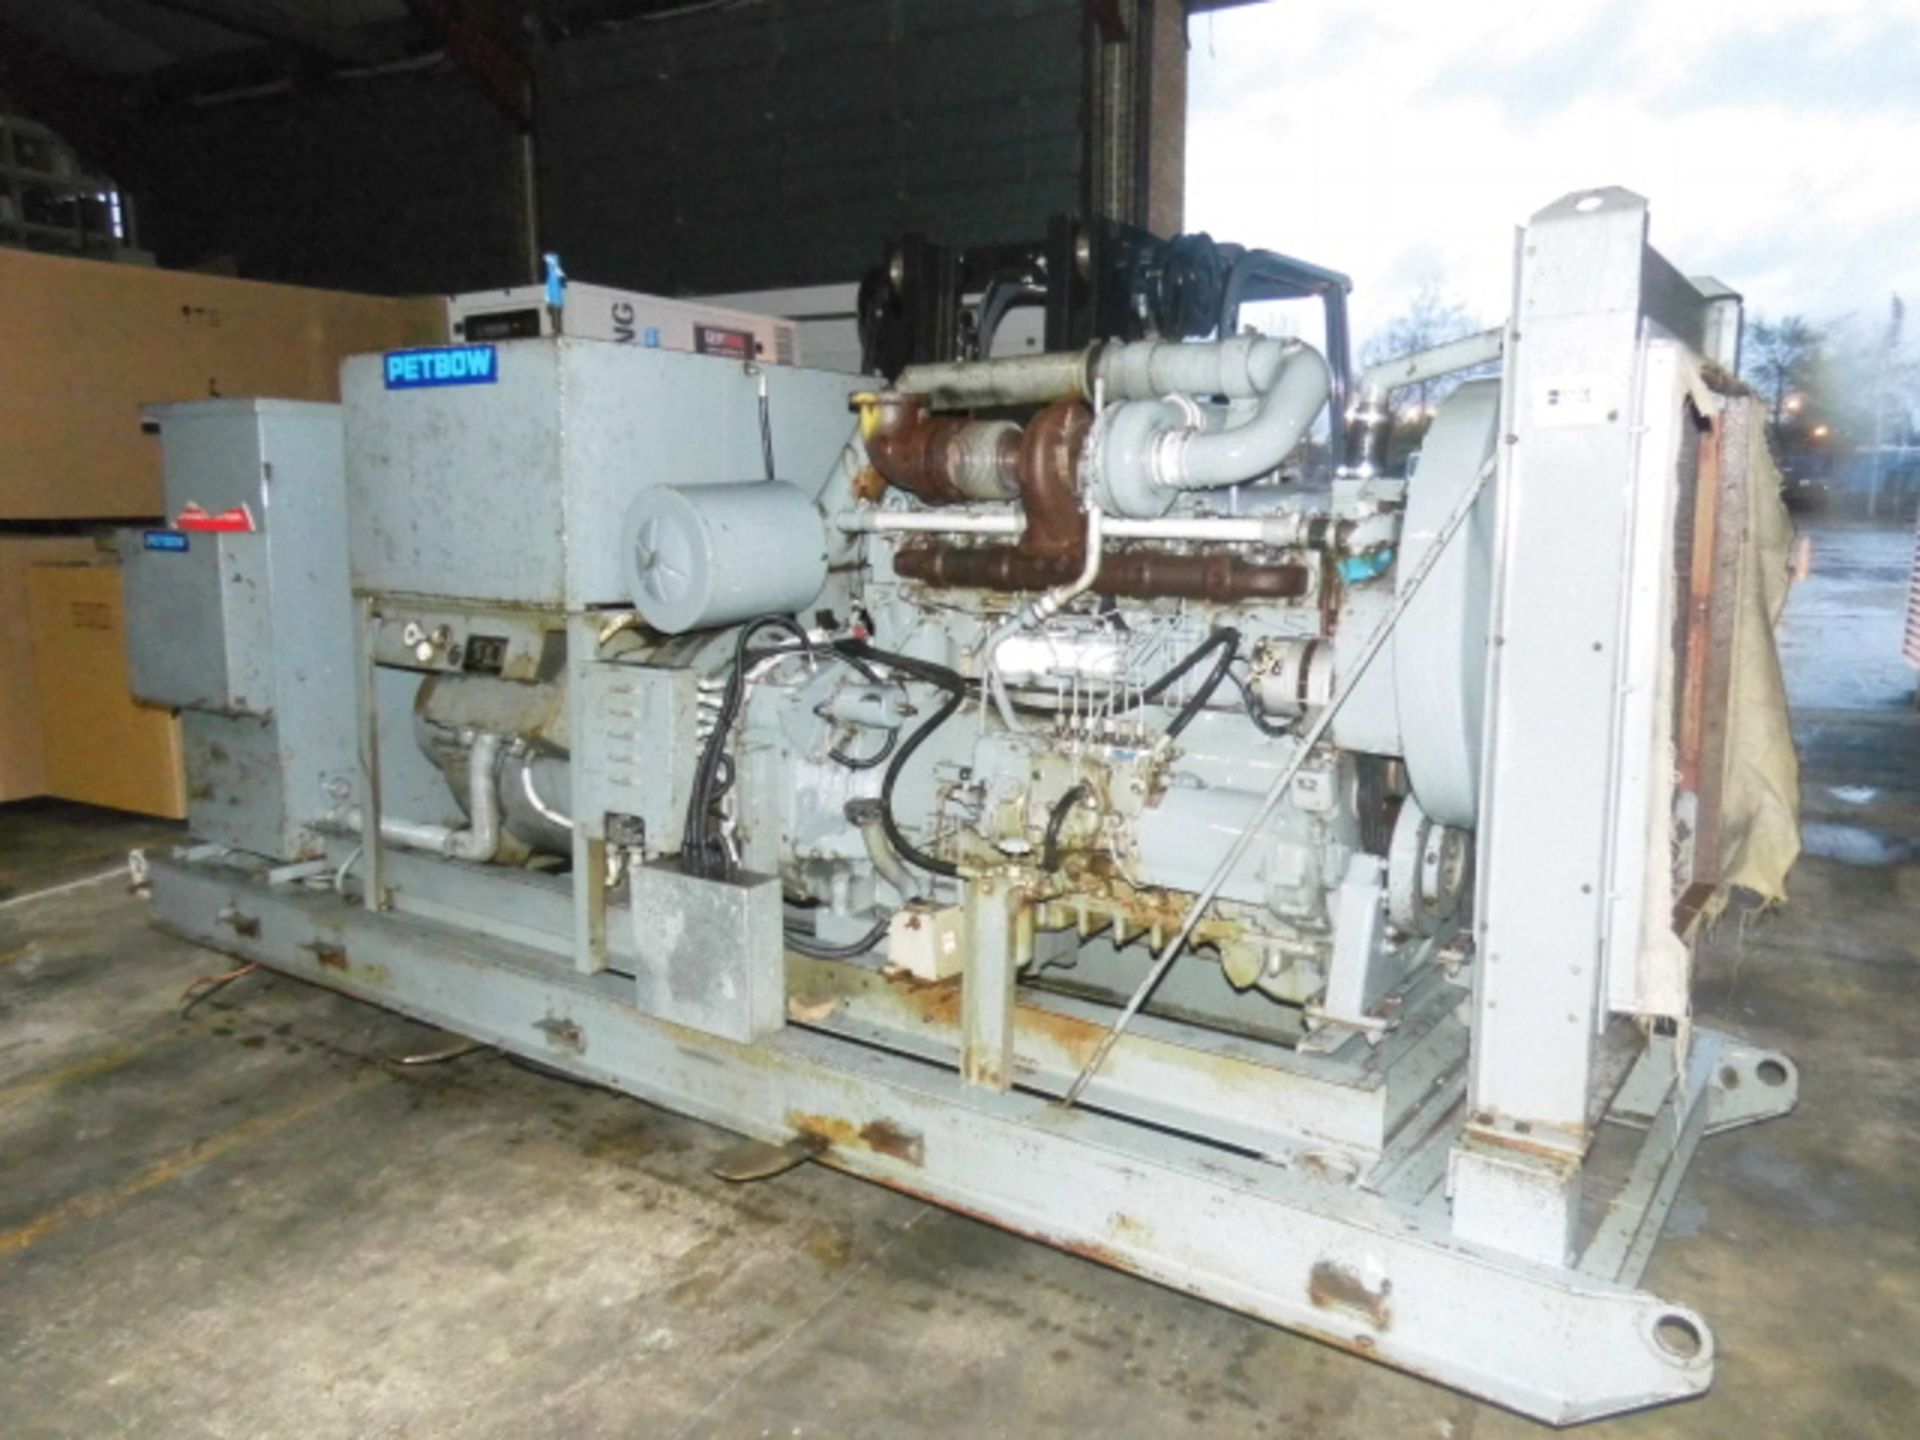 1 x Used 206 kva Petbow diesel generator, - Image 2 of 3